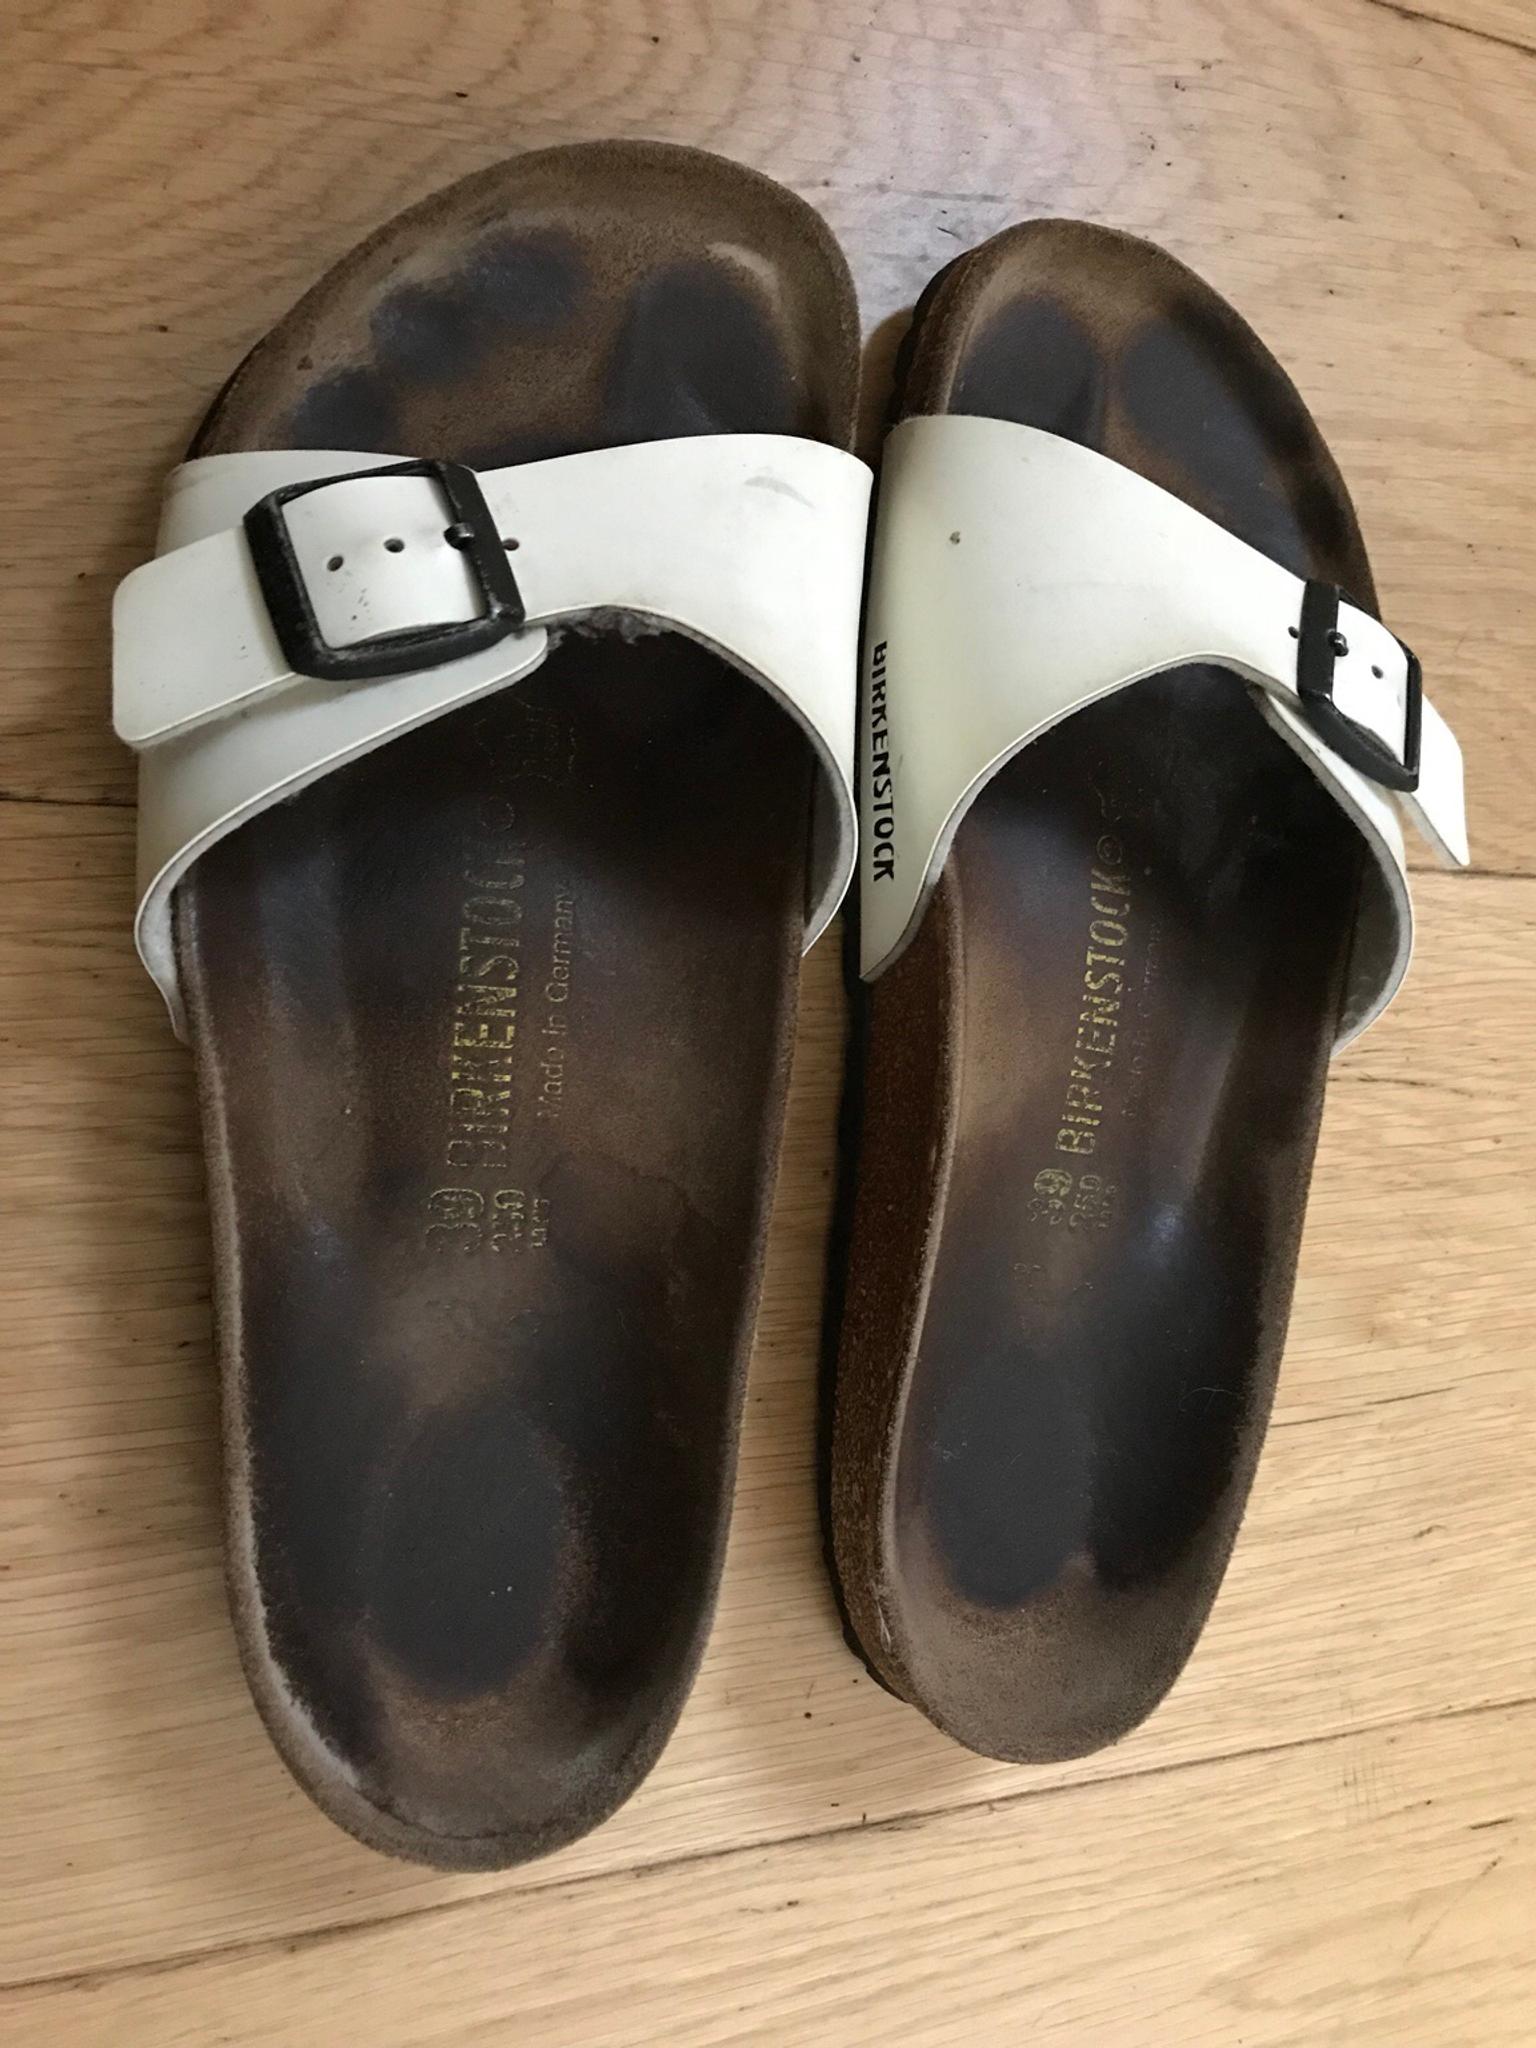 flat white sandals uk